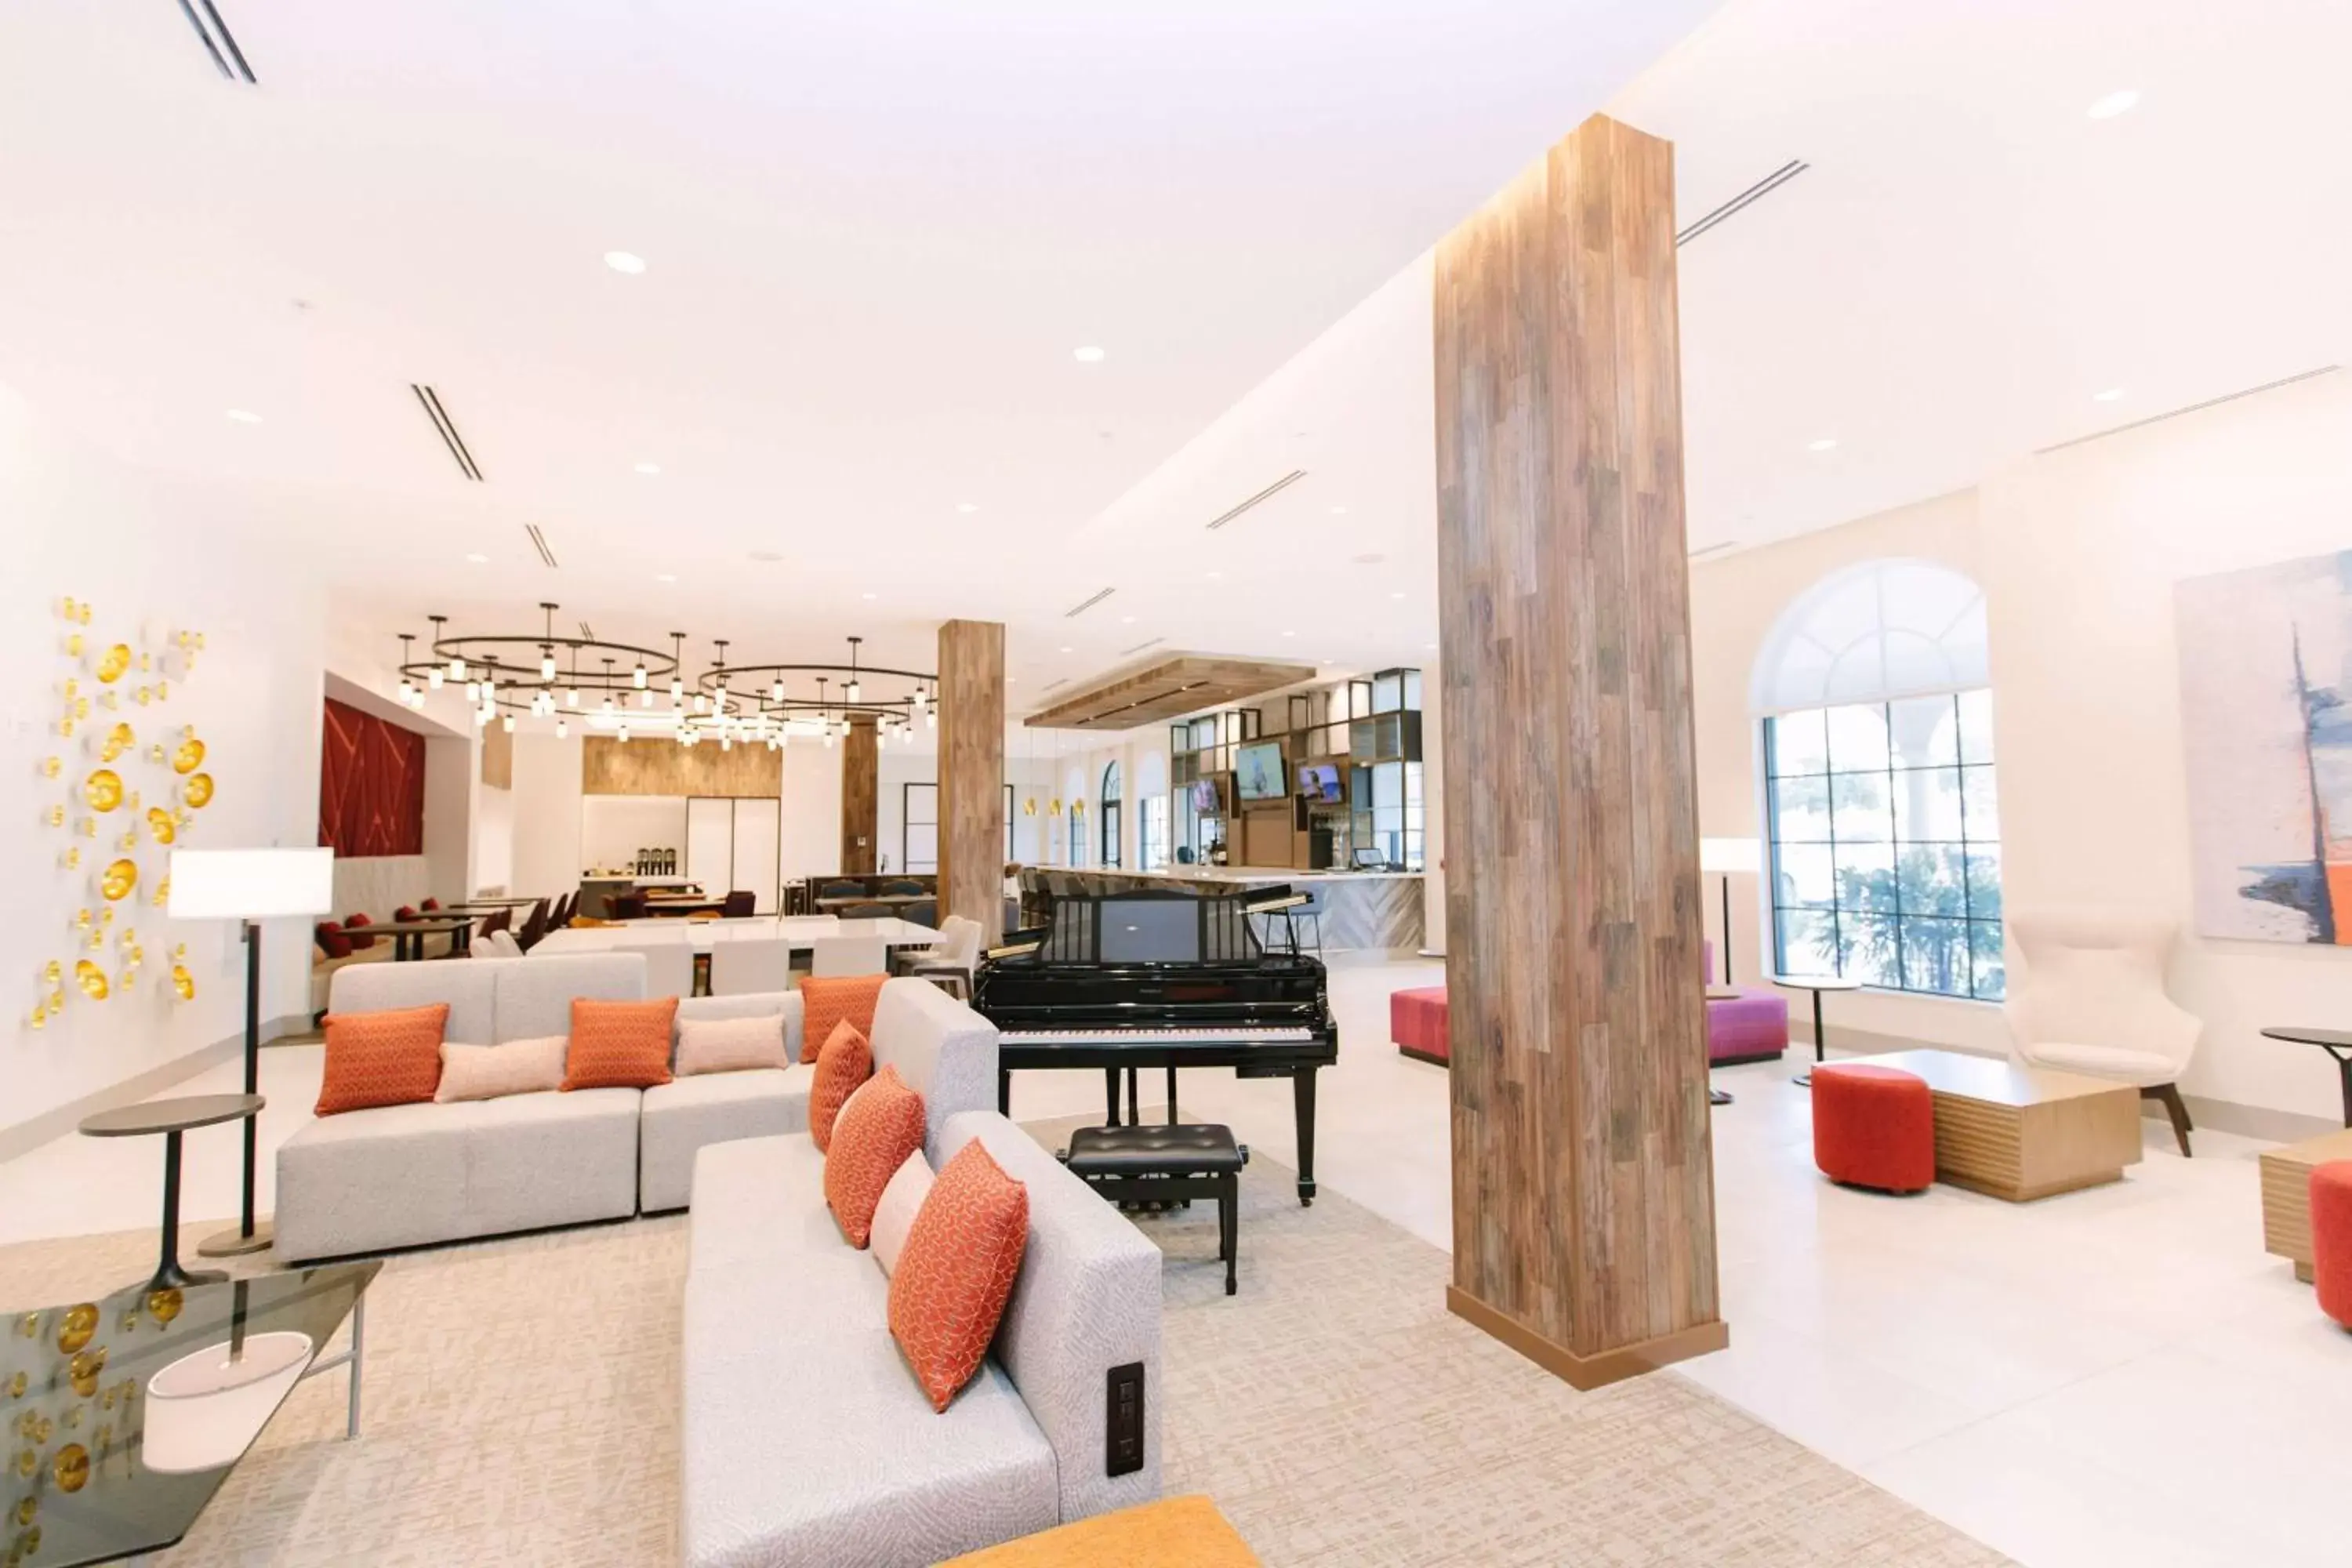 Lobby or reception in Hilton Garden Inn Winter Park, FL